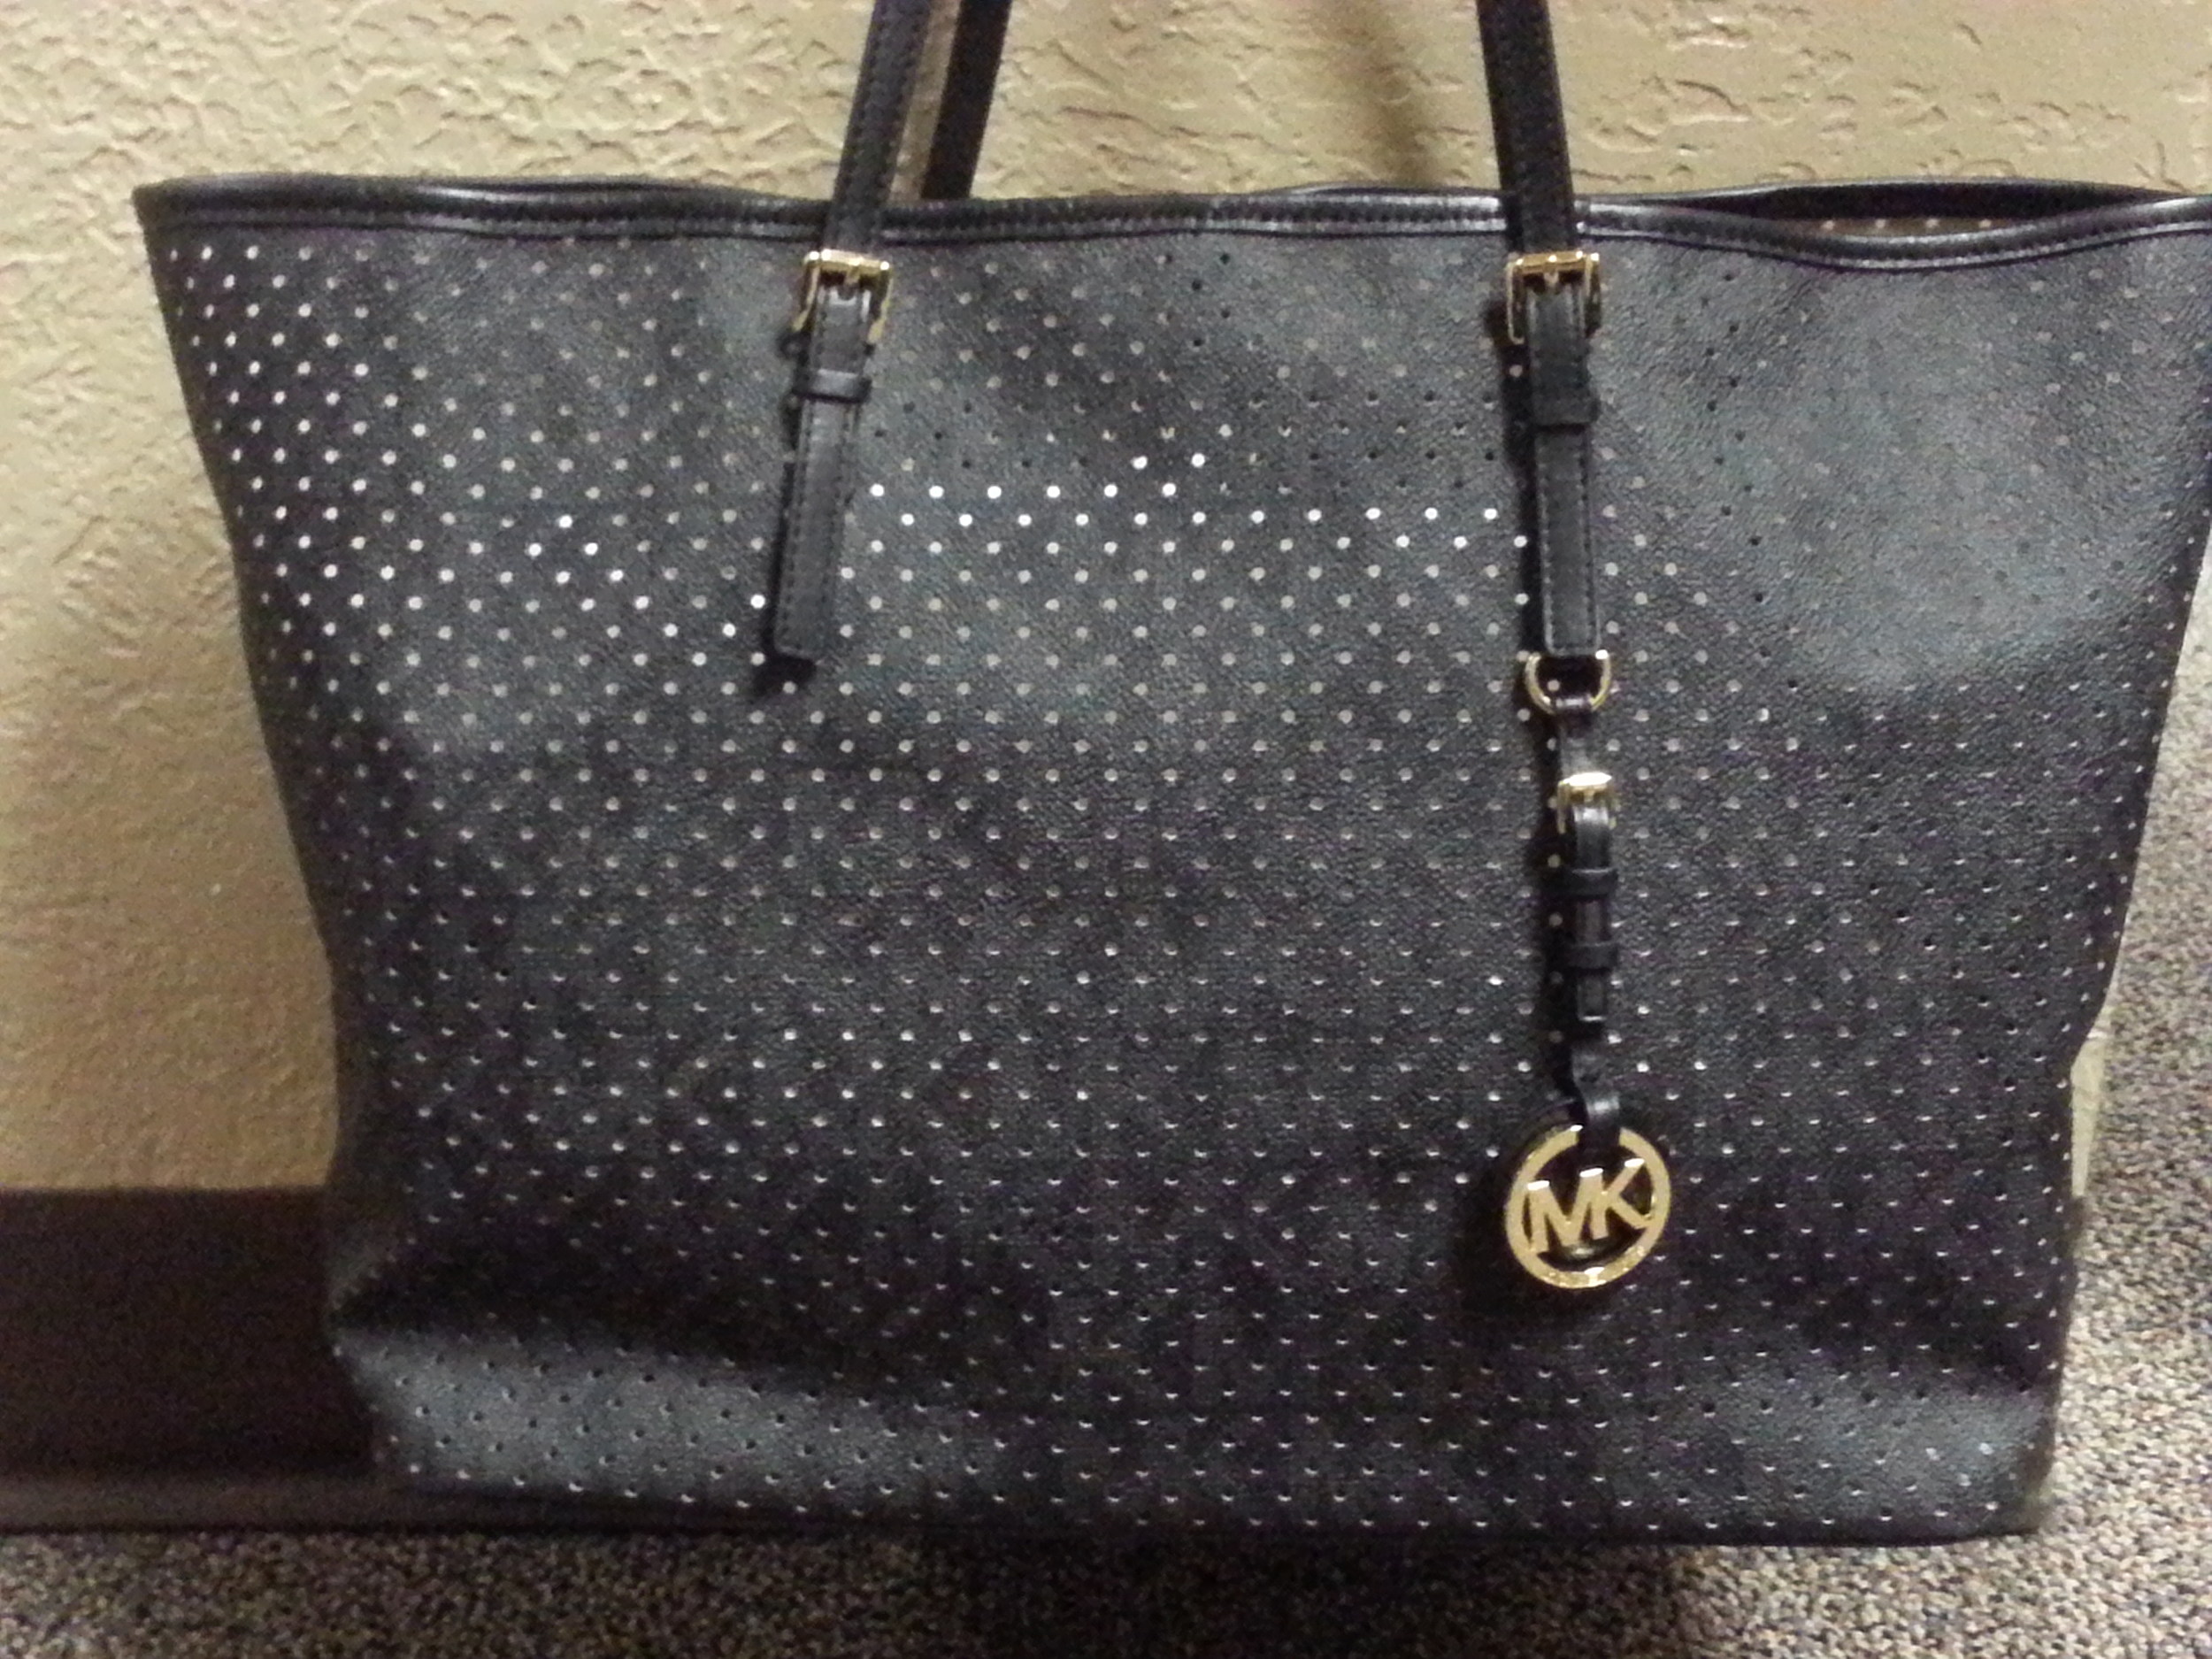 MK handbags 2013